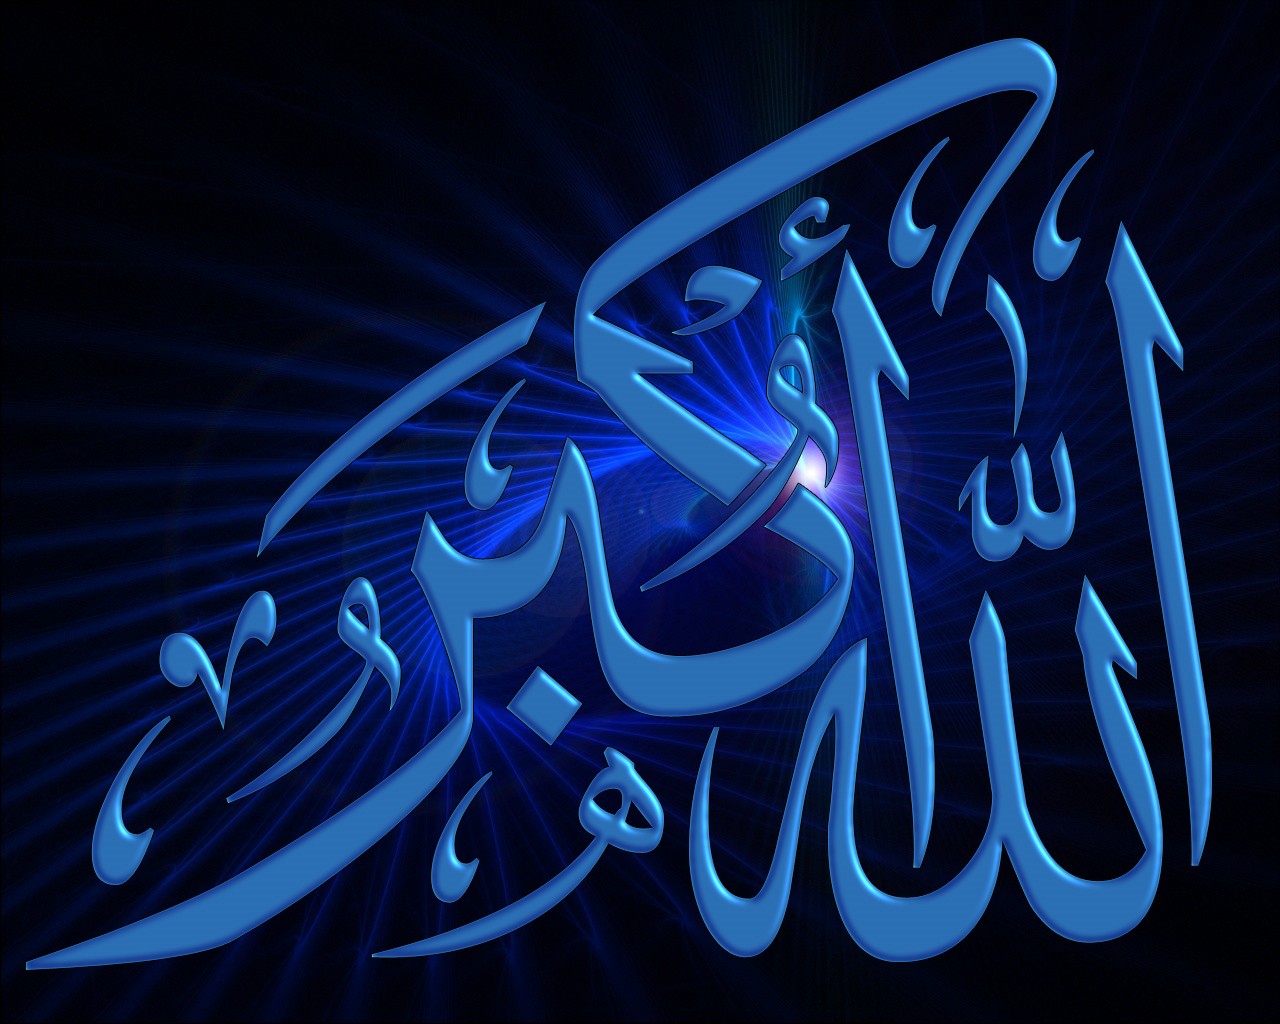 Super Islamic Themes Allah Name Image